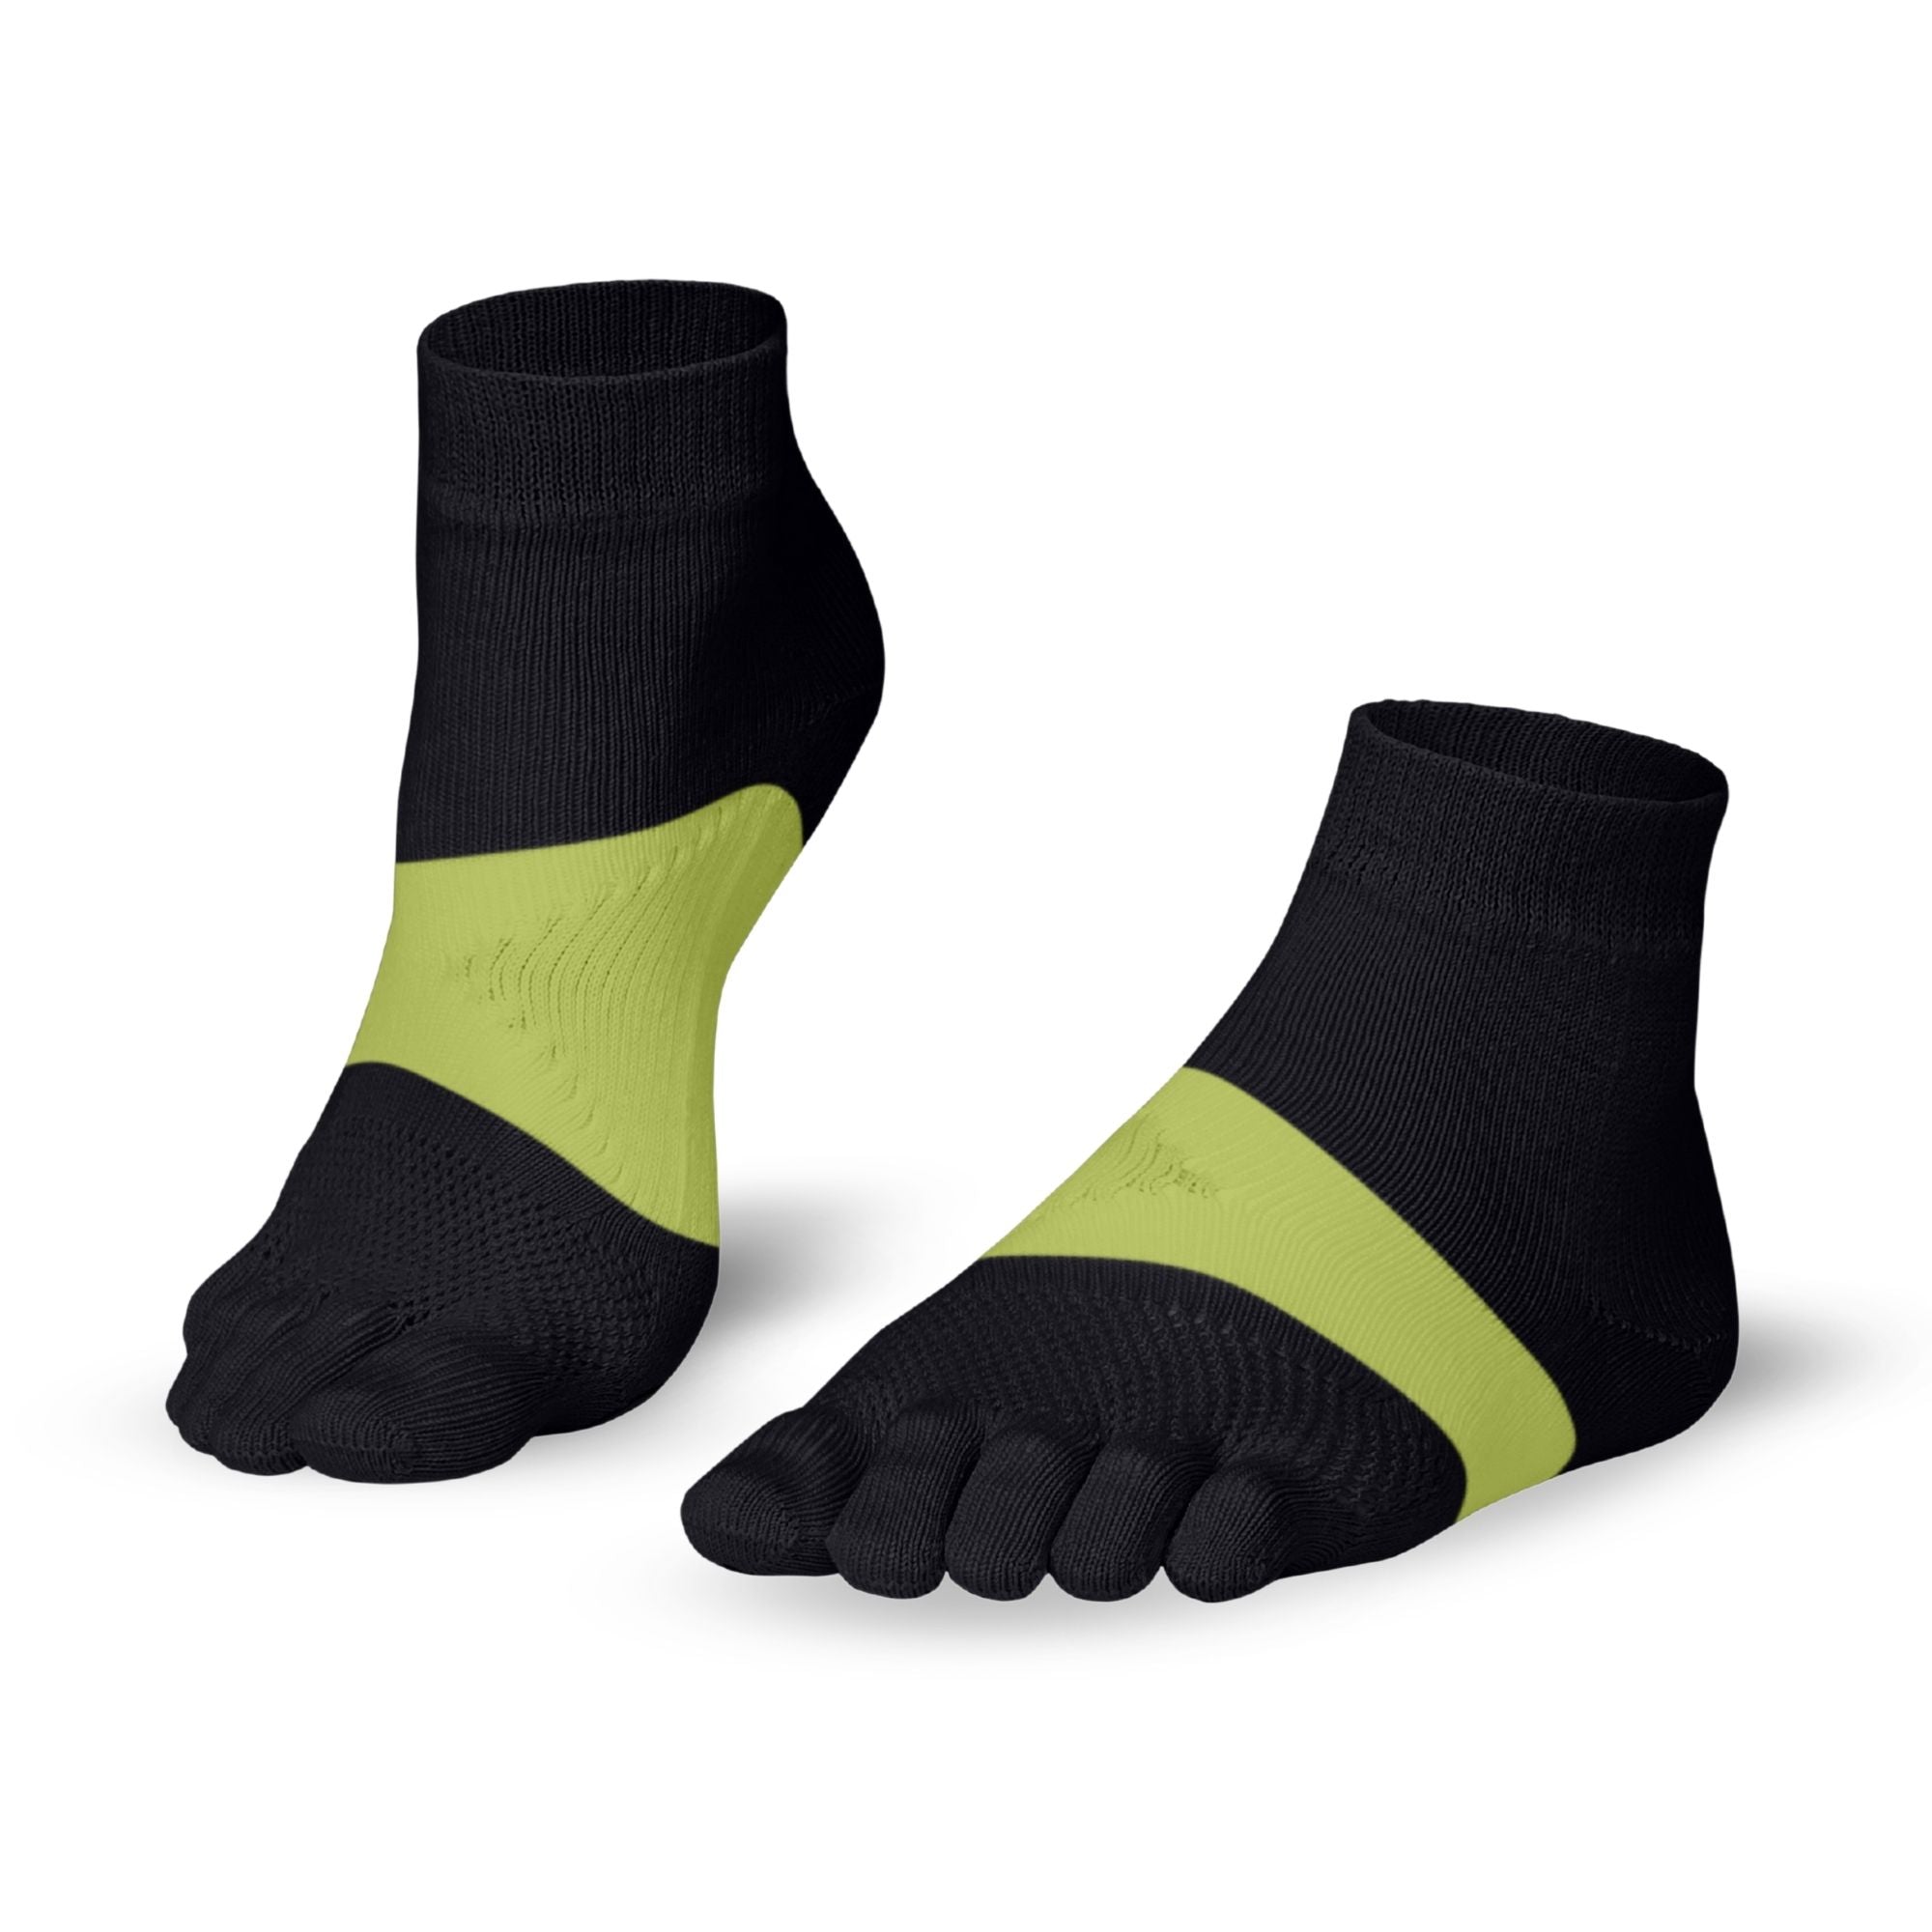 Knitido Marathon toe socks for sports and long distance running - black / green